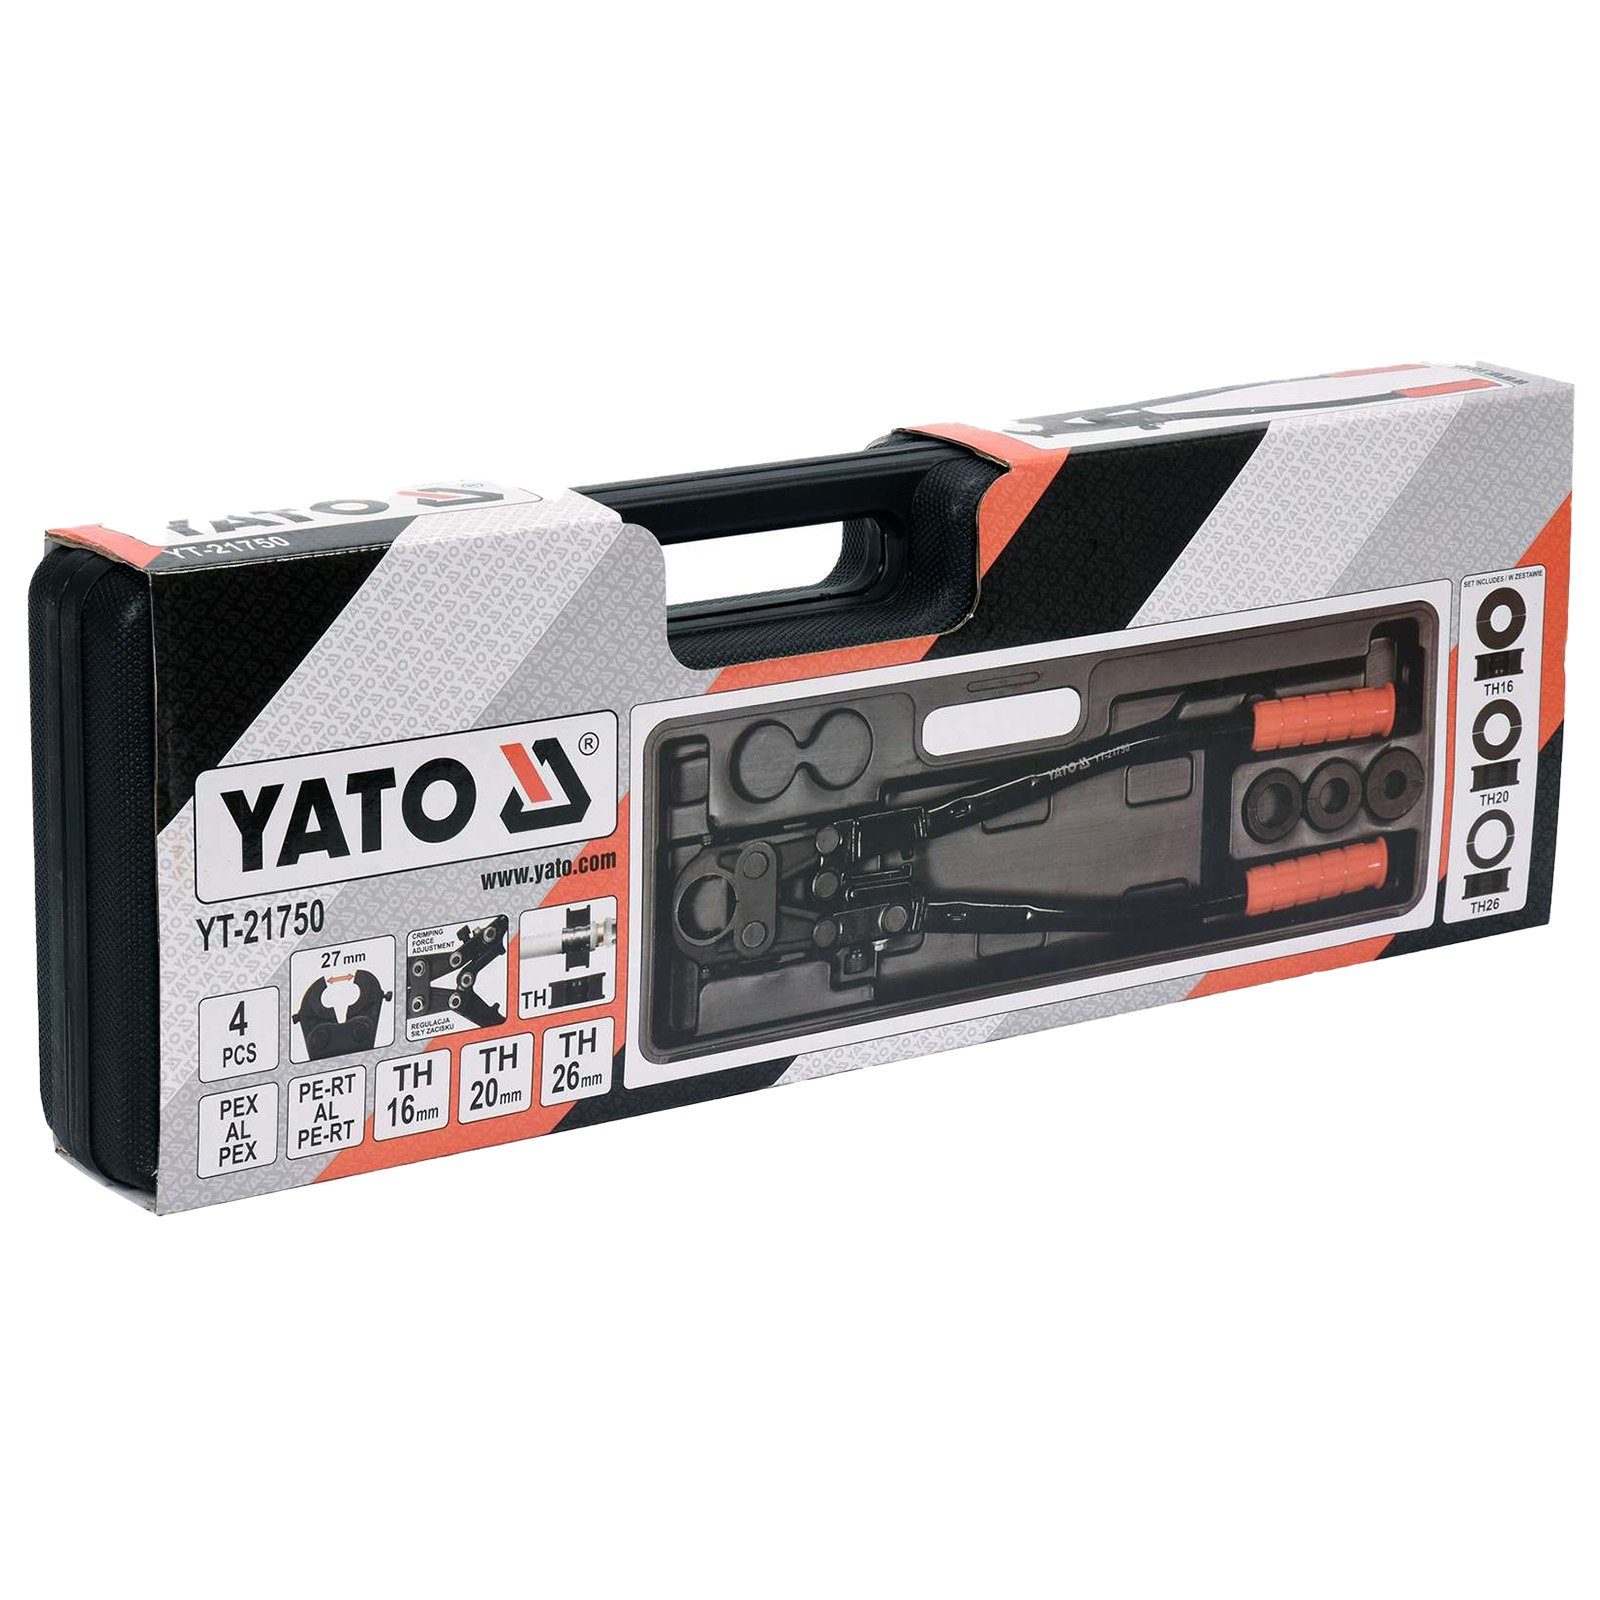 Yato Crimpzange Rohrpresszange Press-Zange Rohr-Presse Pressbacke Press-Werkzeug